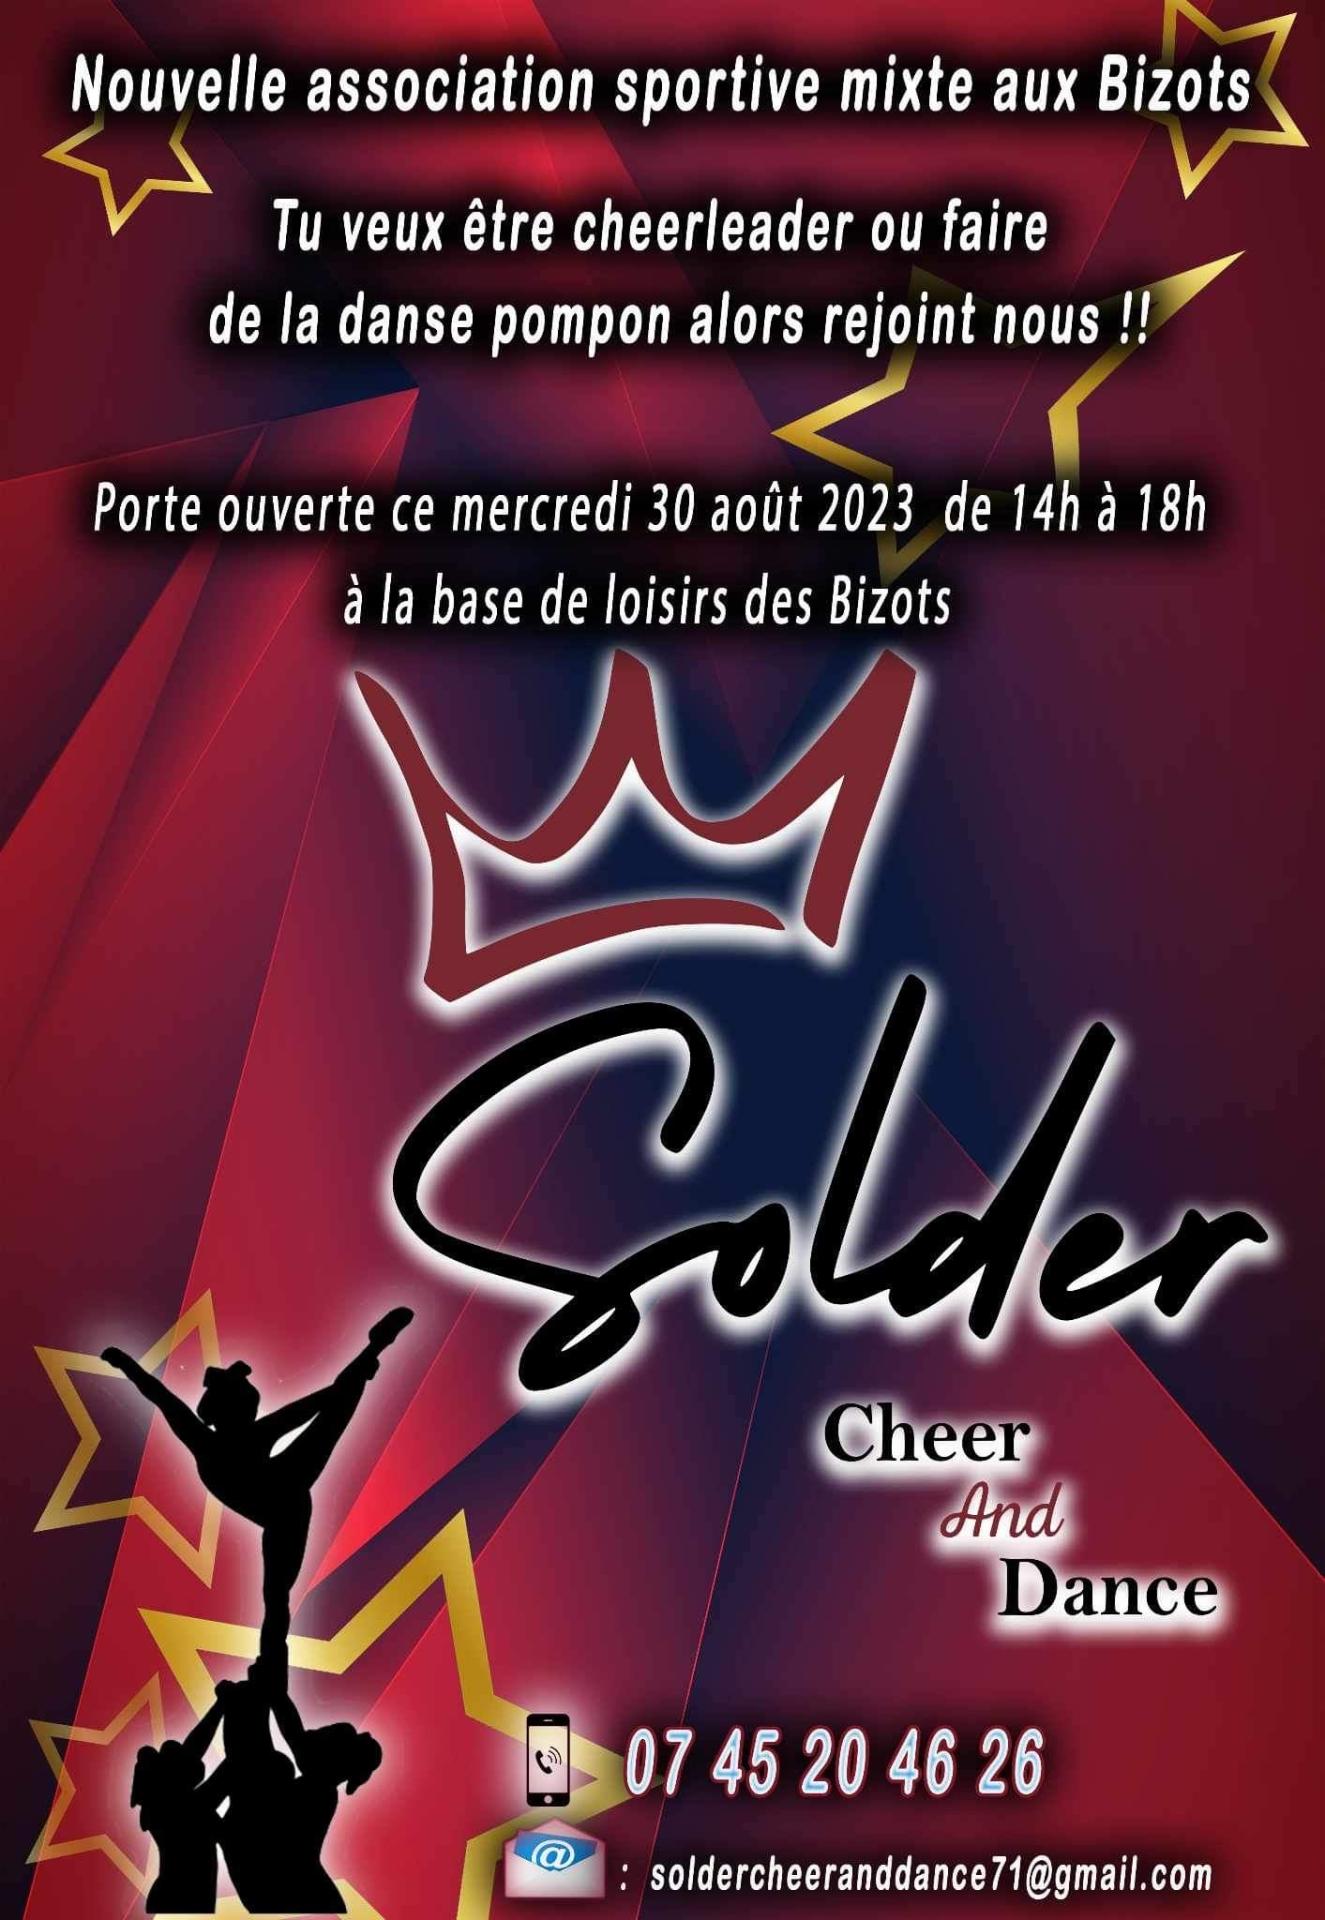 Solder Cheer and Dance